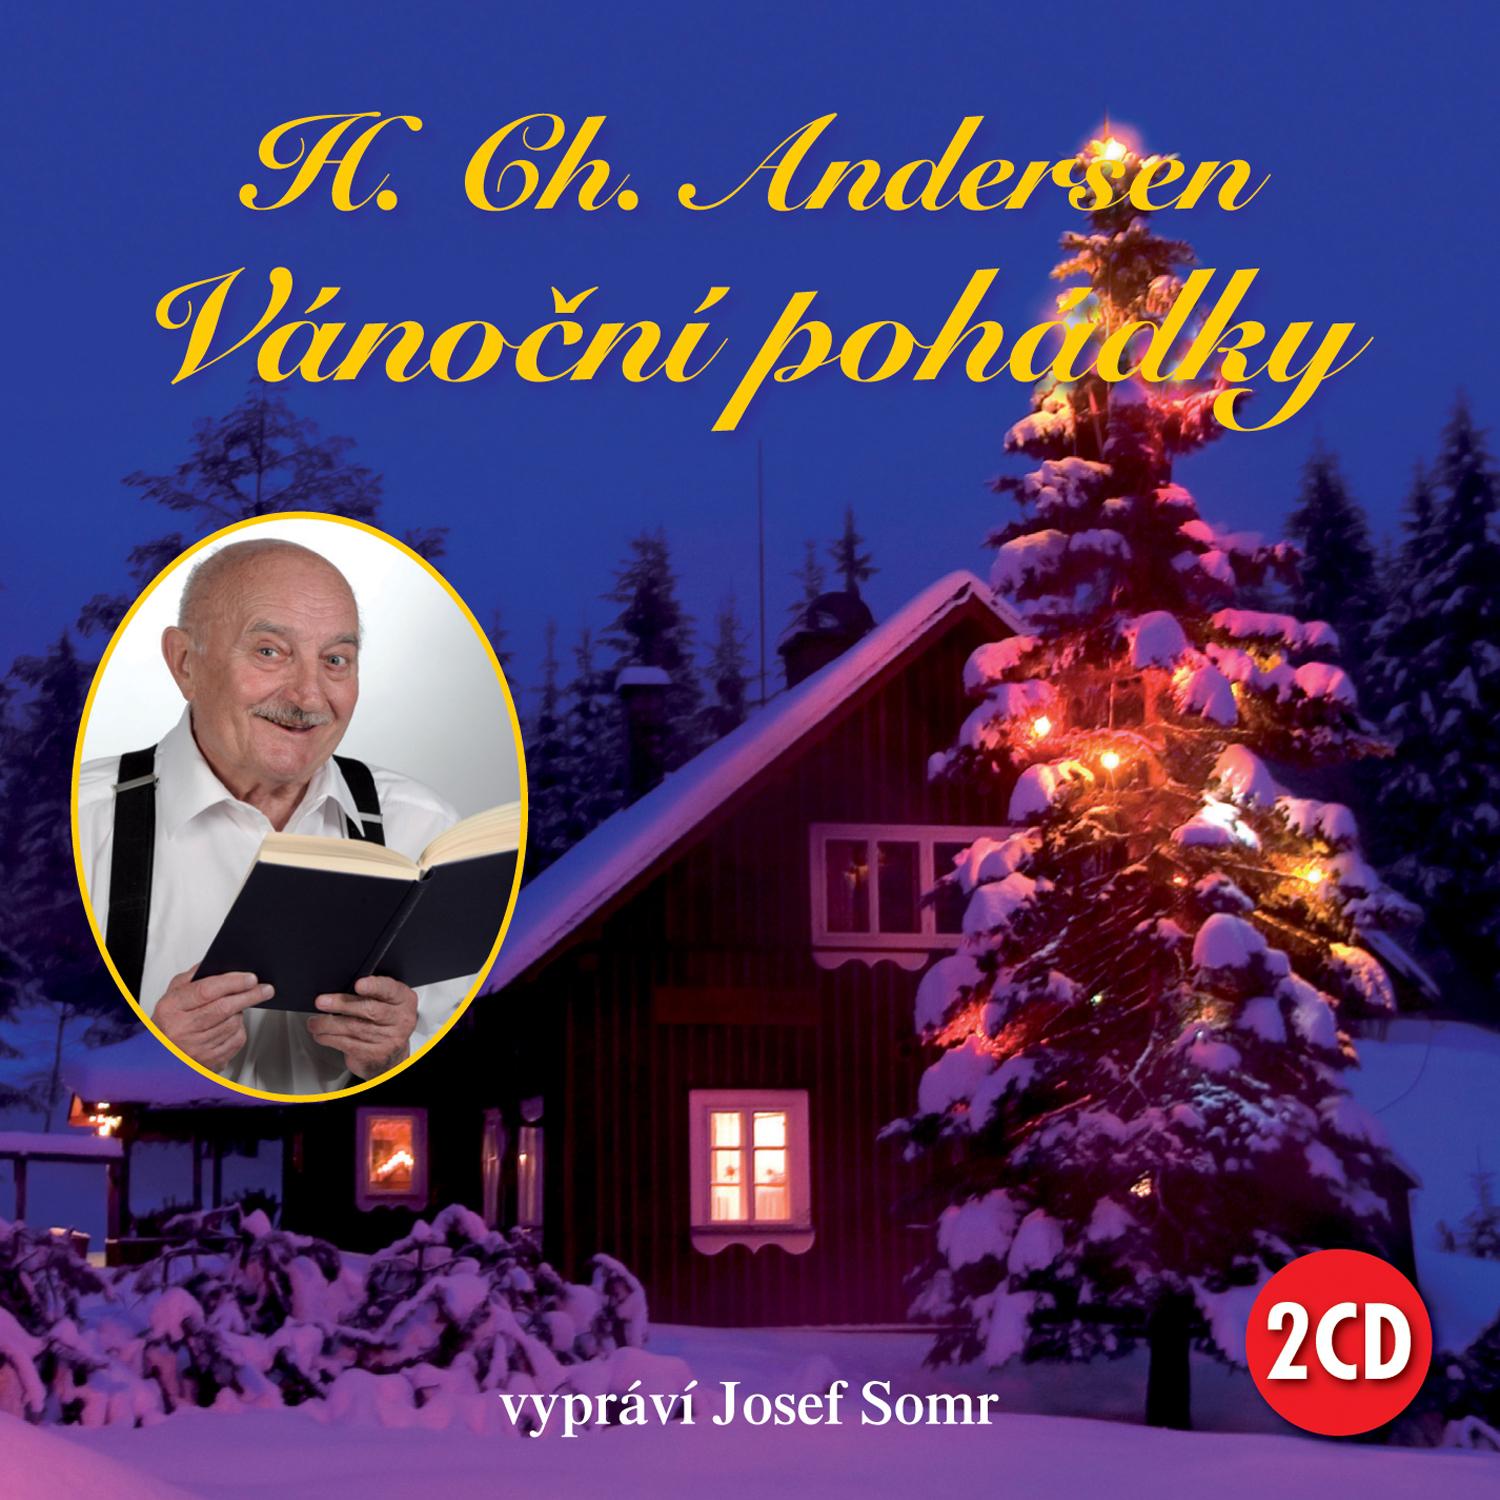 CD Shop - SOMR JOSEF VANOCNI POHADKY H. CH. ANDERSENA